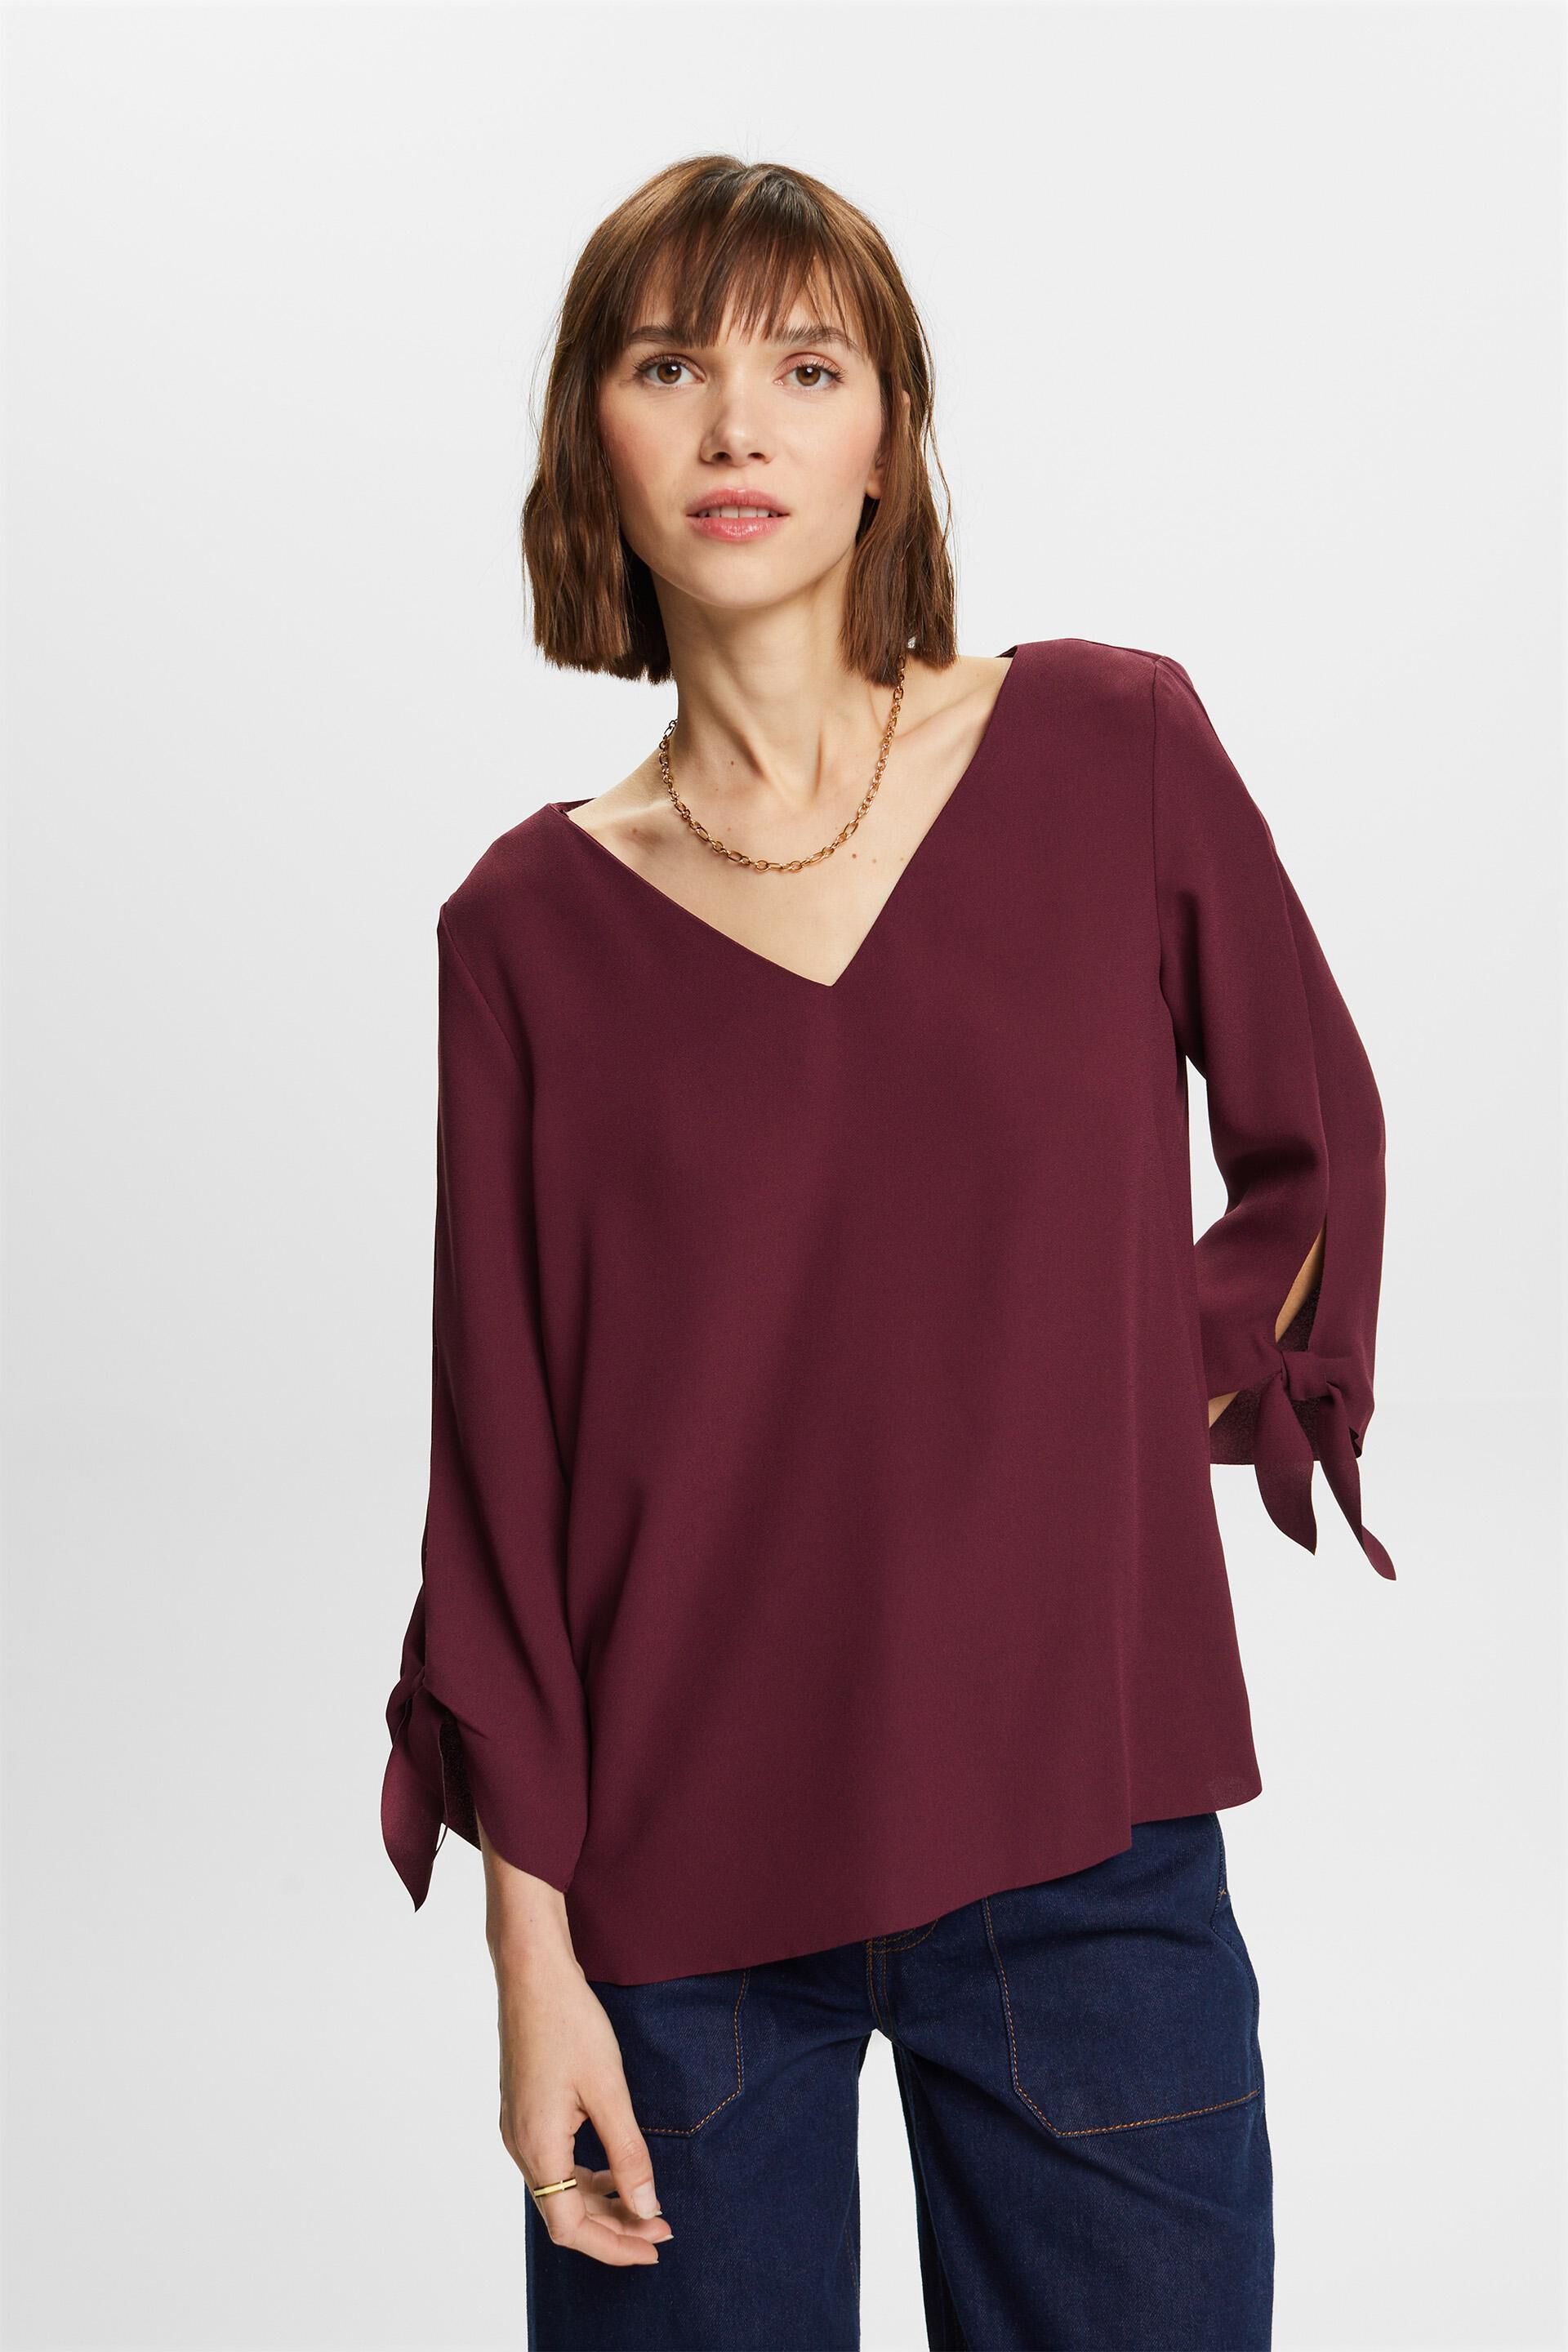 Esprit open edges with Stretch blouse